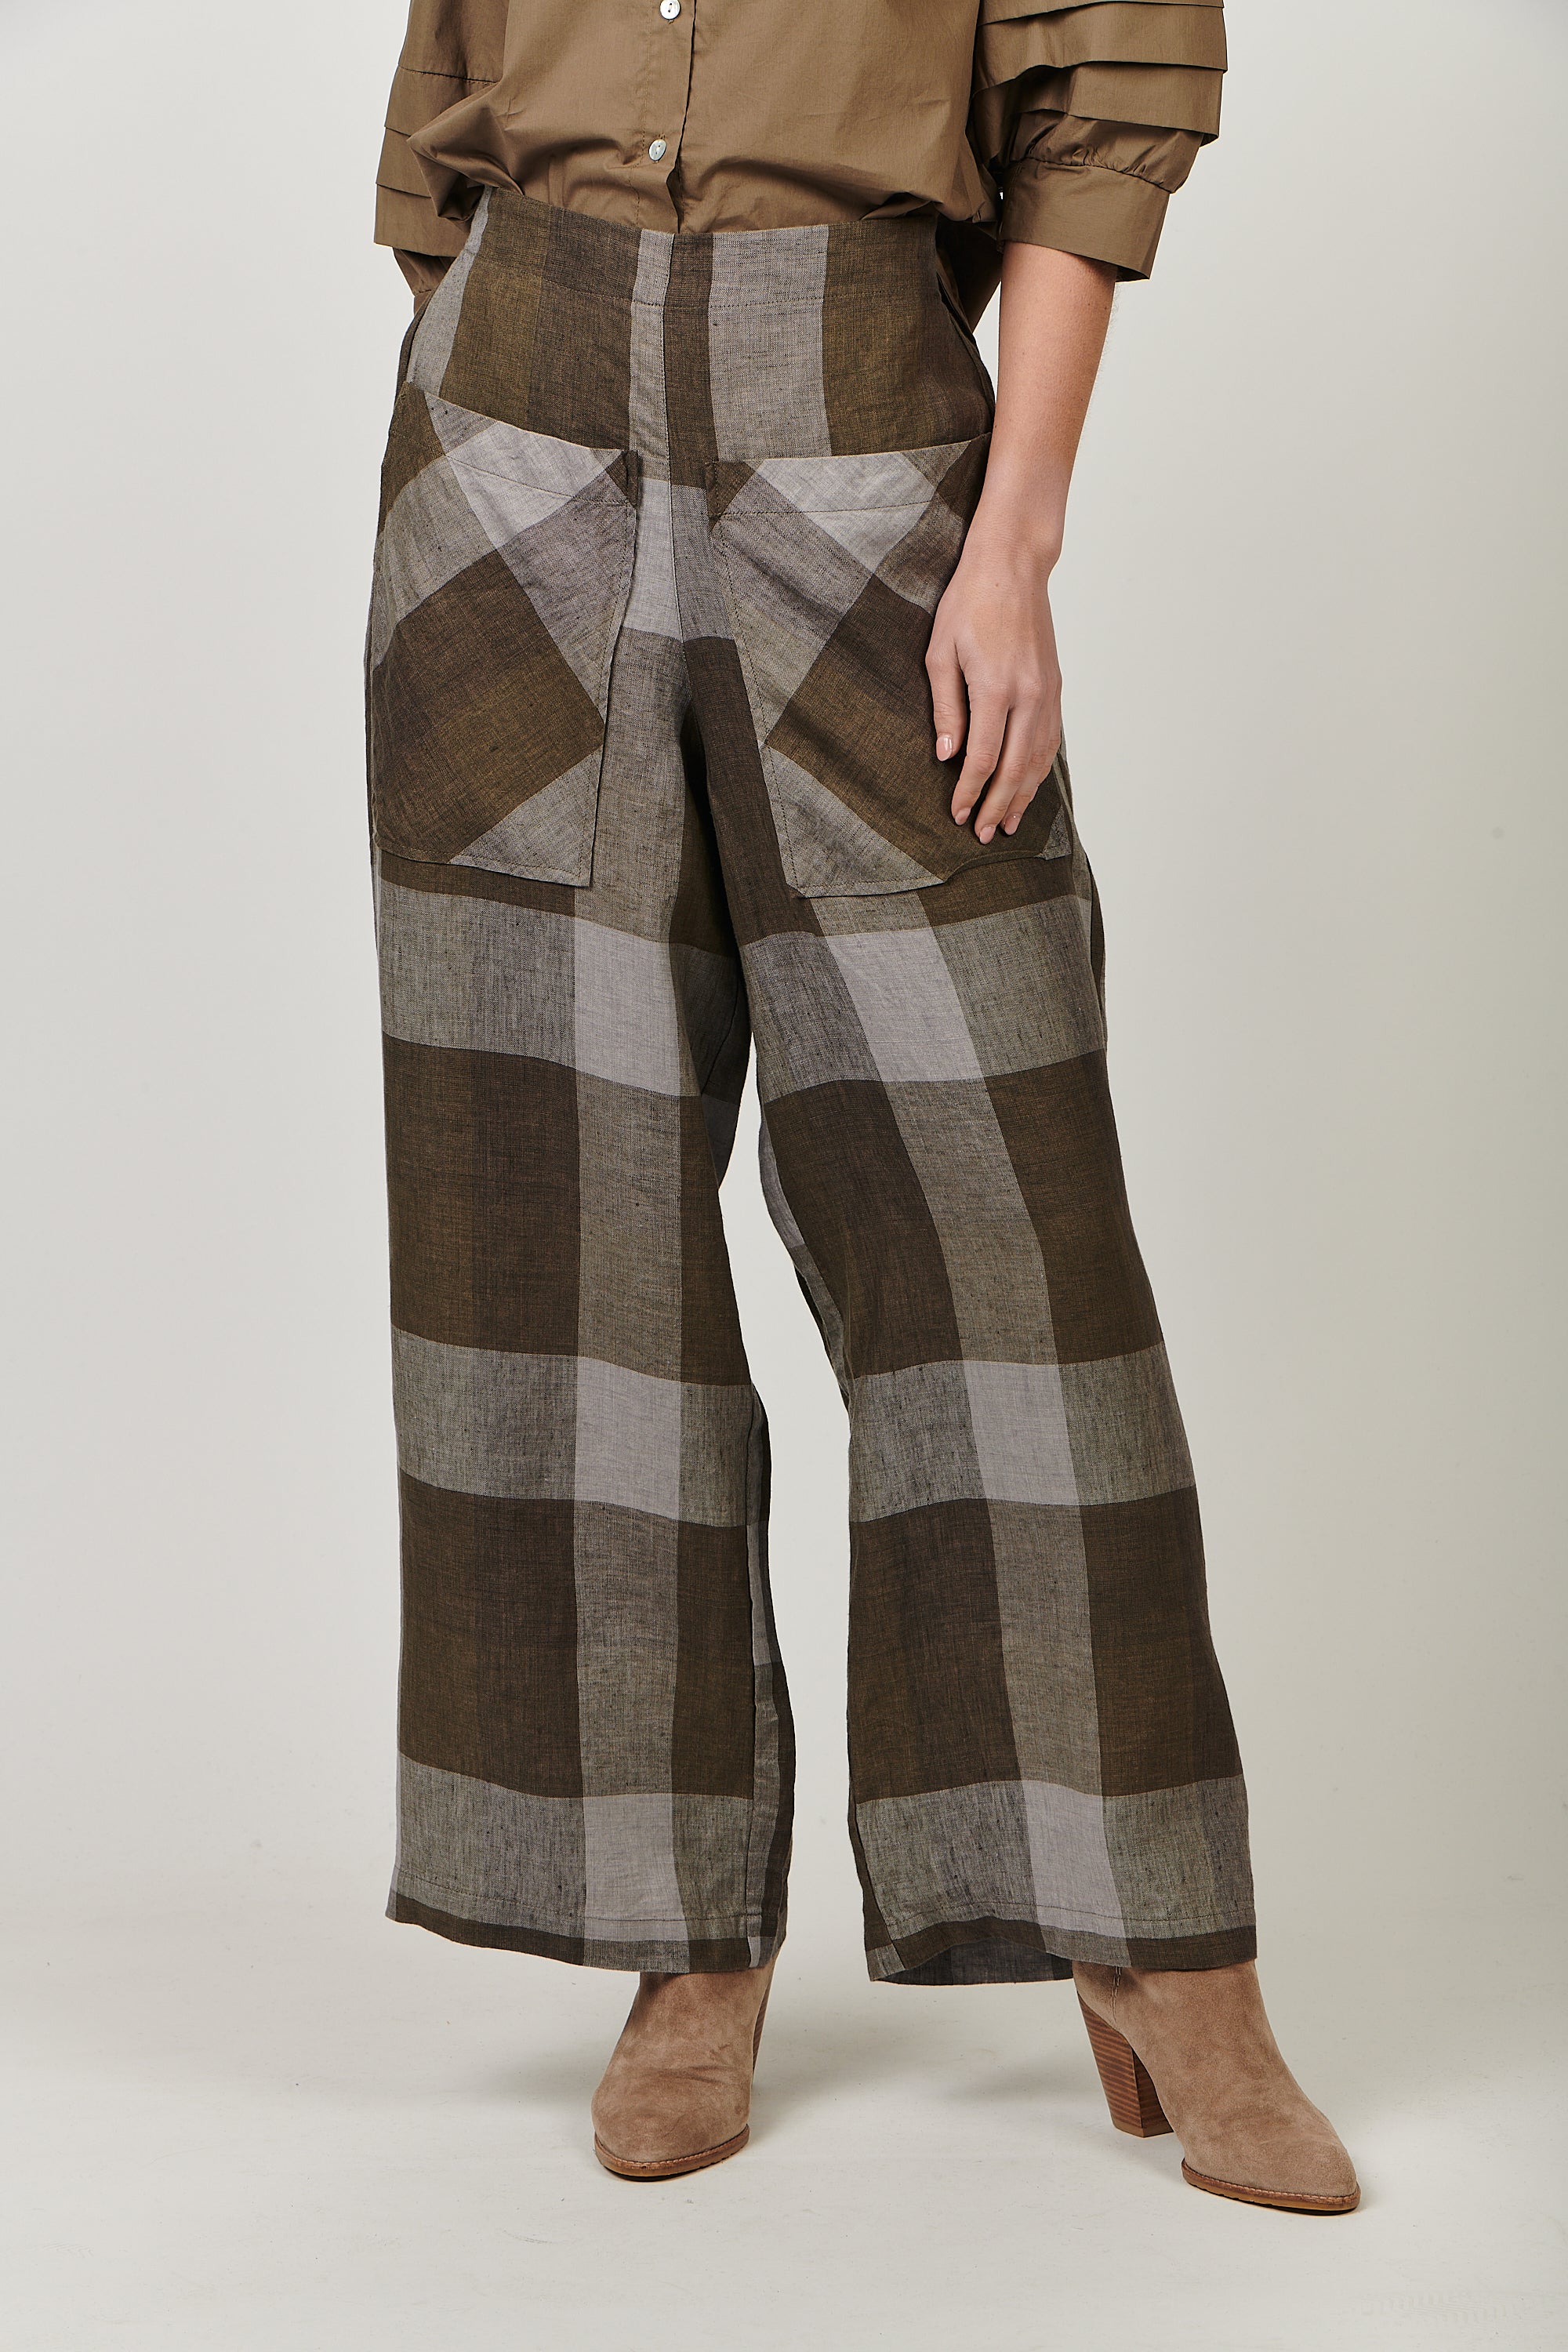 Linen Pants - Breen Plaid-Pants-Naturals by O&J-The Bay Room